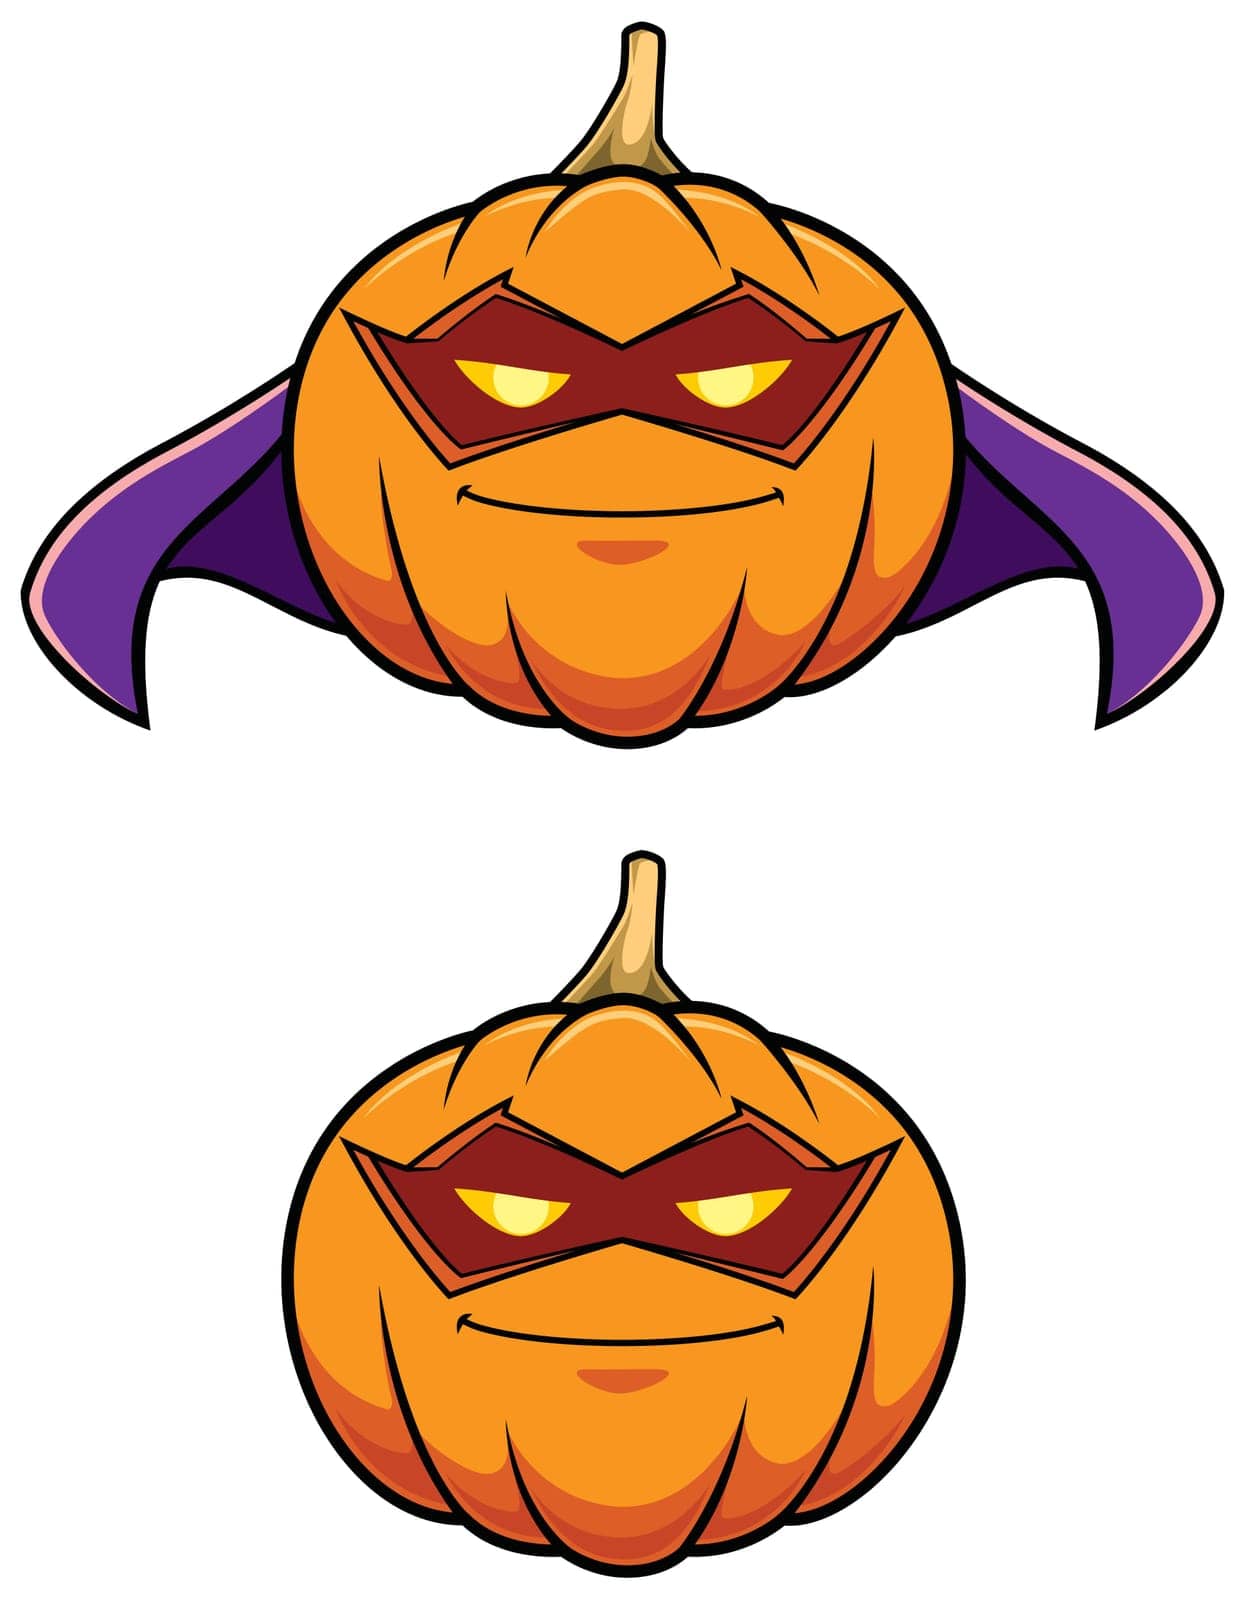 Mascot illustration with pumpkin superhero isolated on white background.